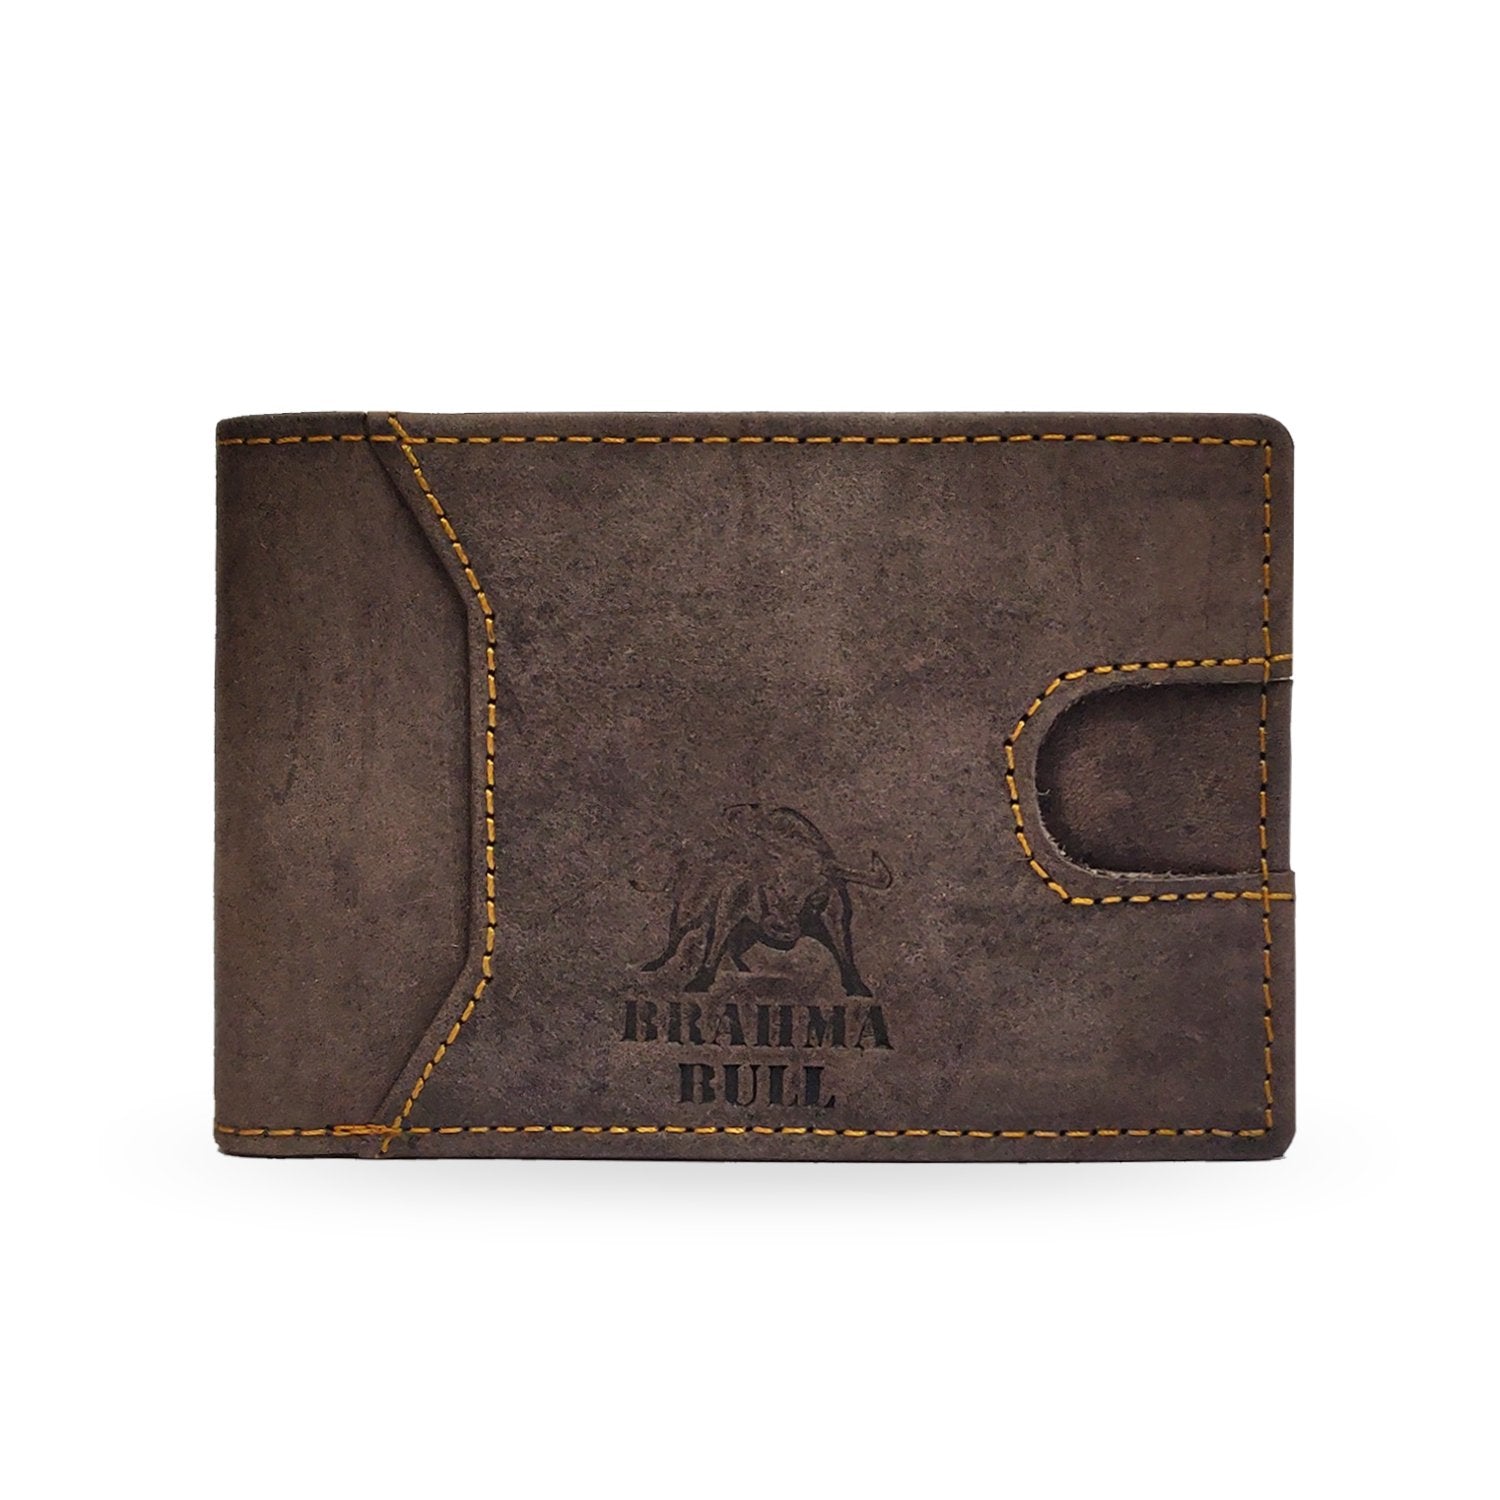 Brahma Bull Slim Edition Multi Purpose Leather Wallet - Brown - Brahma Bull - Men's Grooming